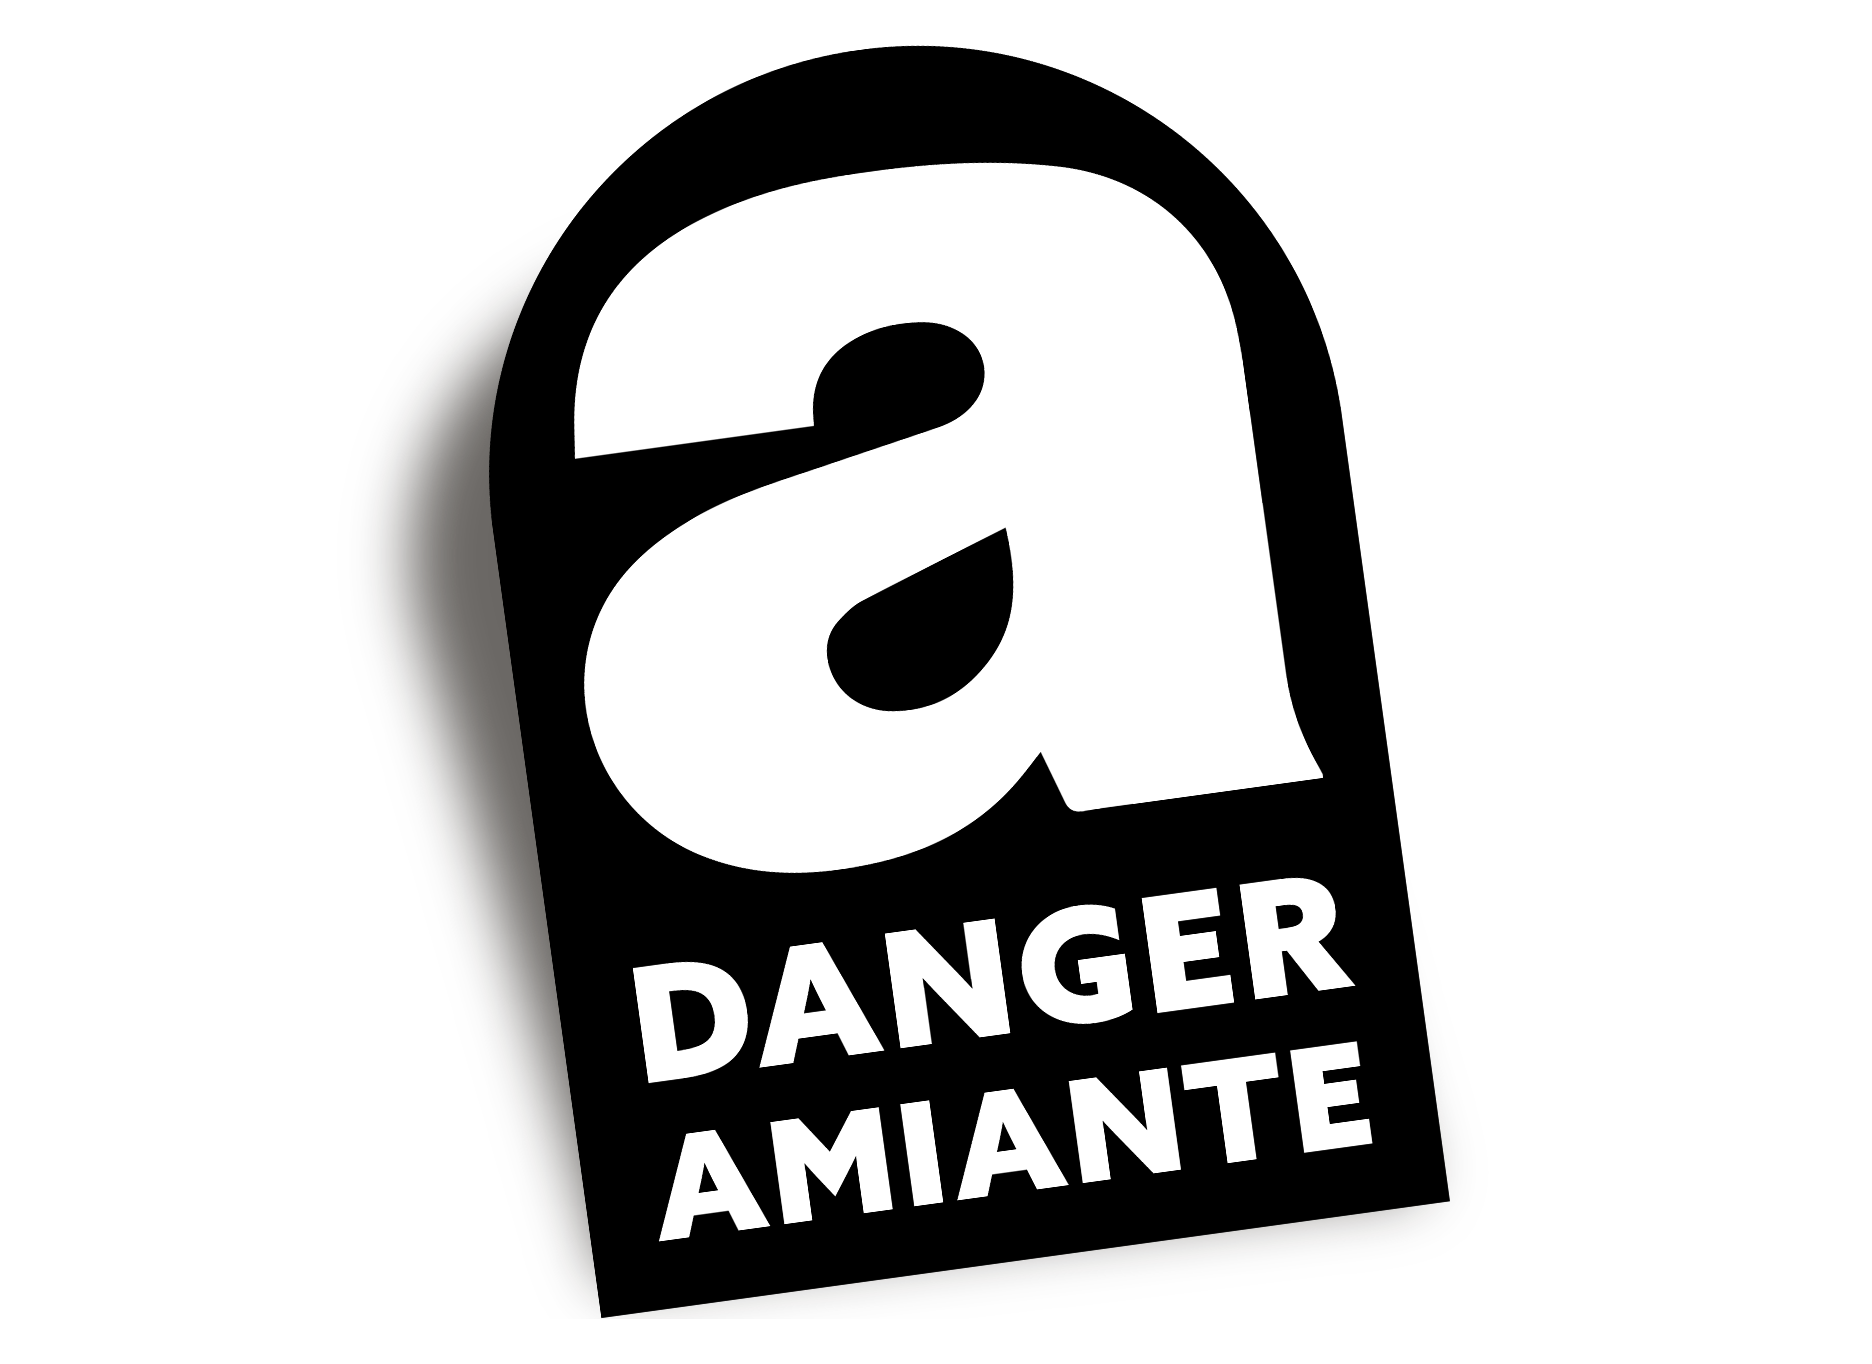 danger-amiante